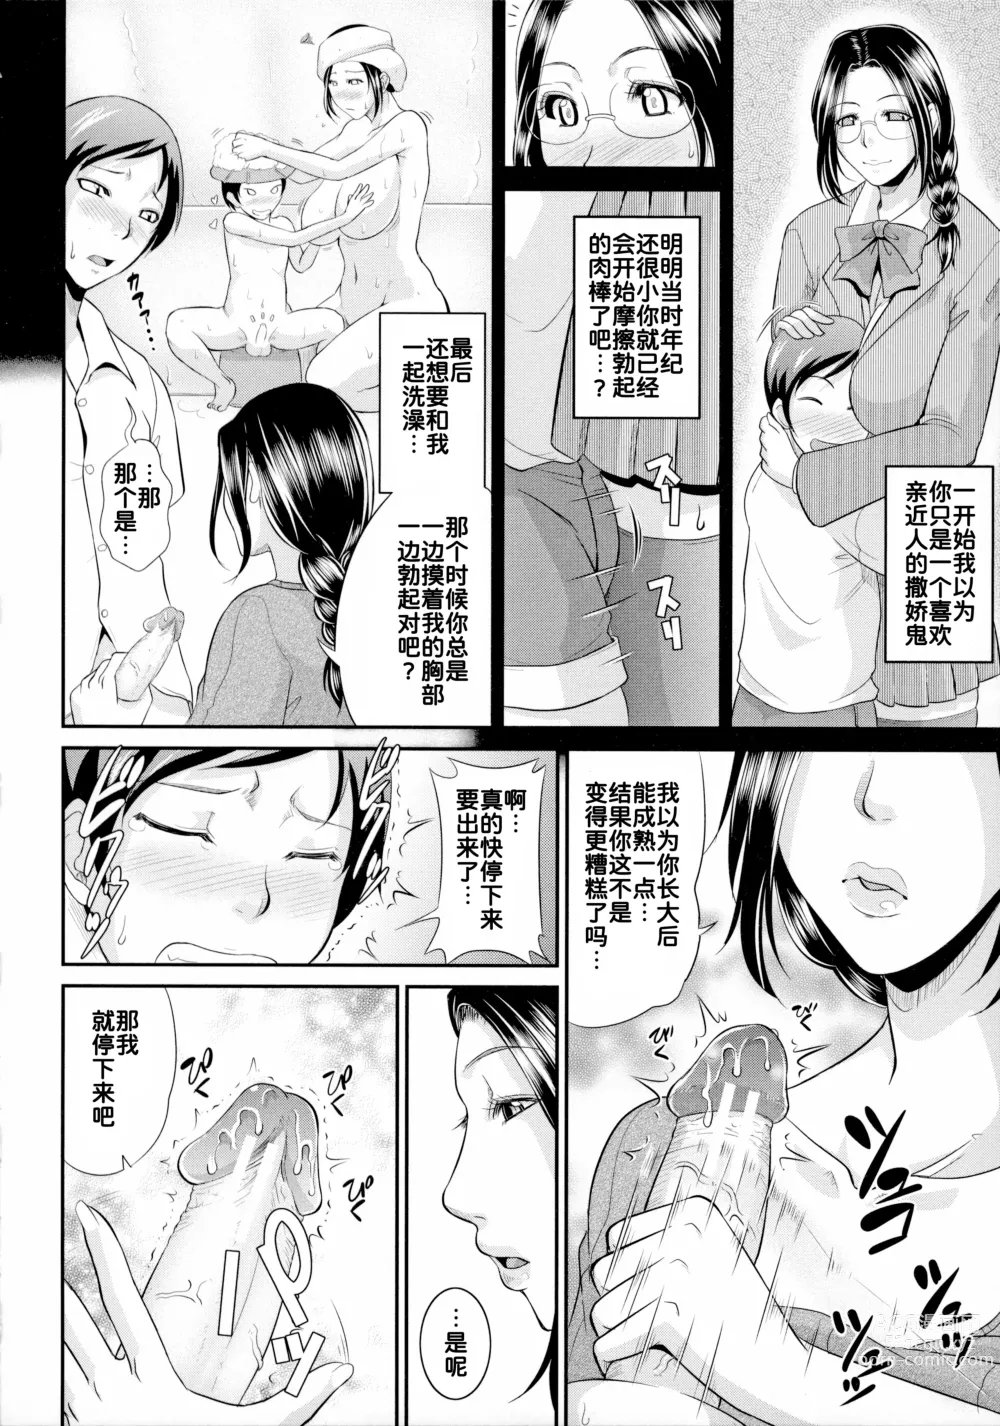 Page 177 of manga Uruwashi no Wife